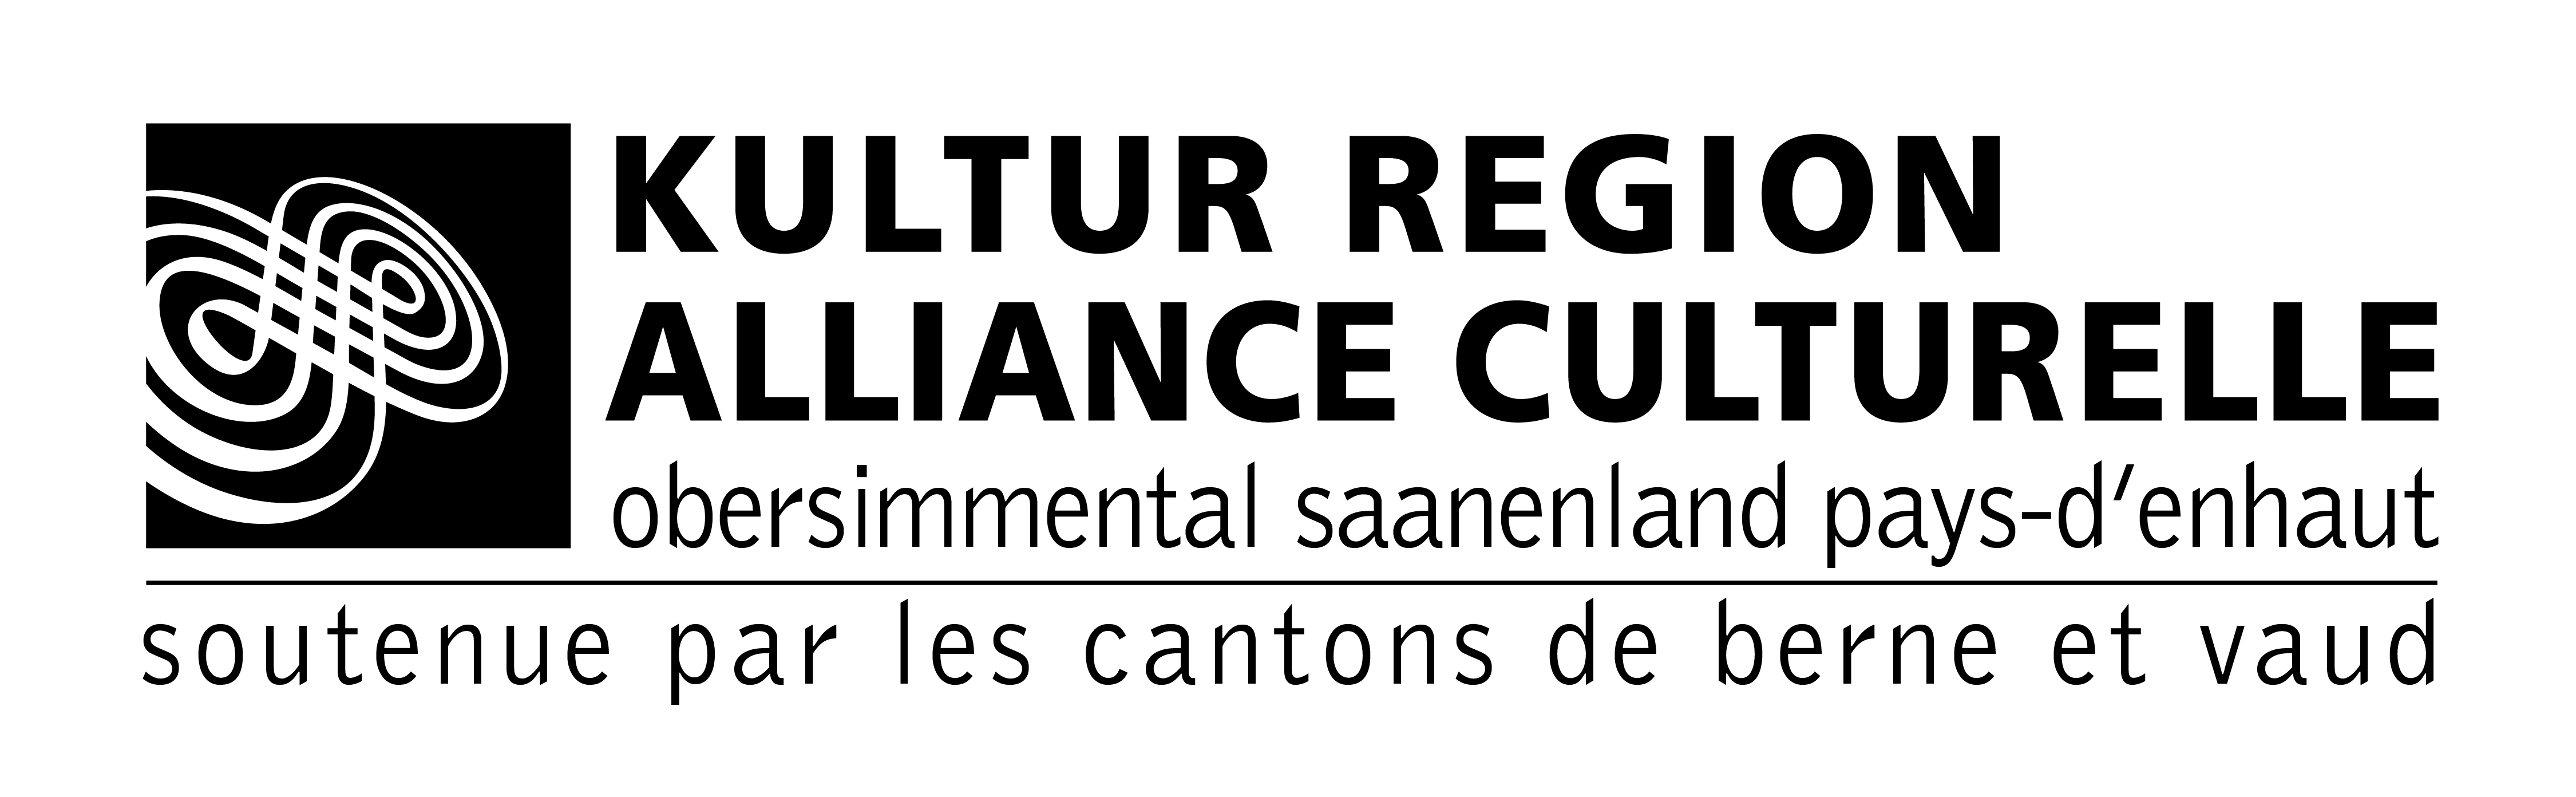 Alliance-Culturelle_new-logo_soutenuE_BLACK.jpg